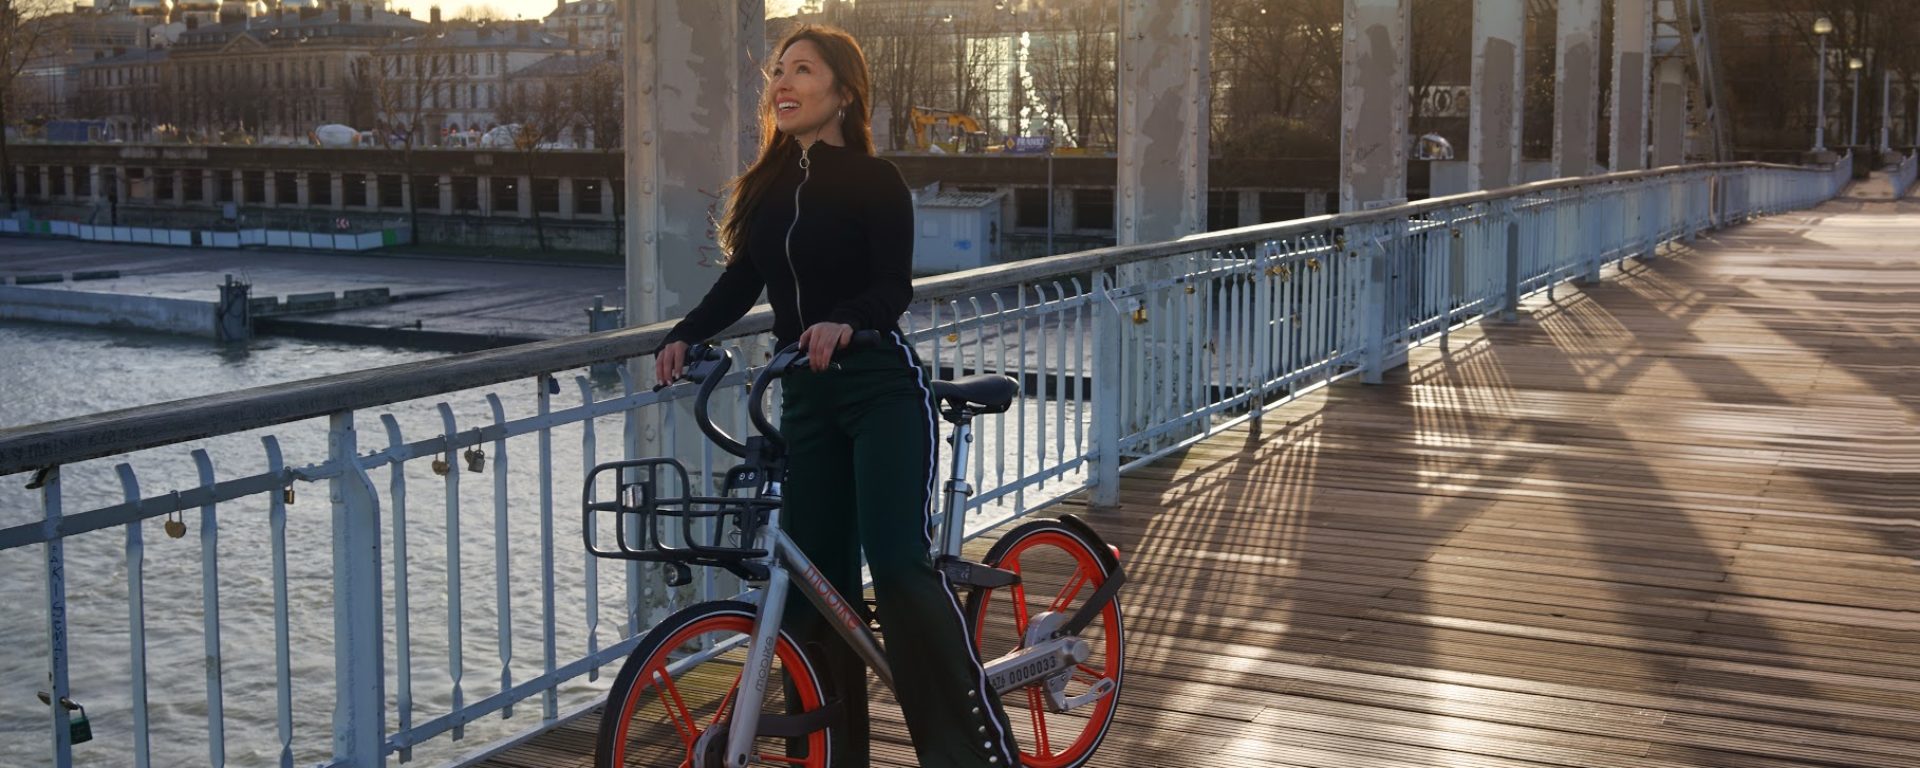 Mobike vélo orange bicycle Transdev mobilité mobility company soft mode doux intermodality multimodality